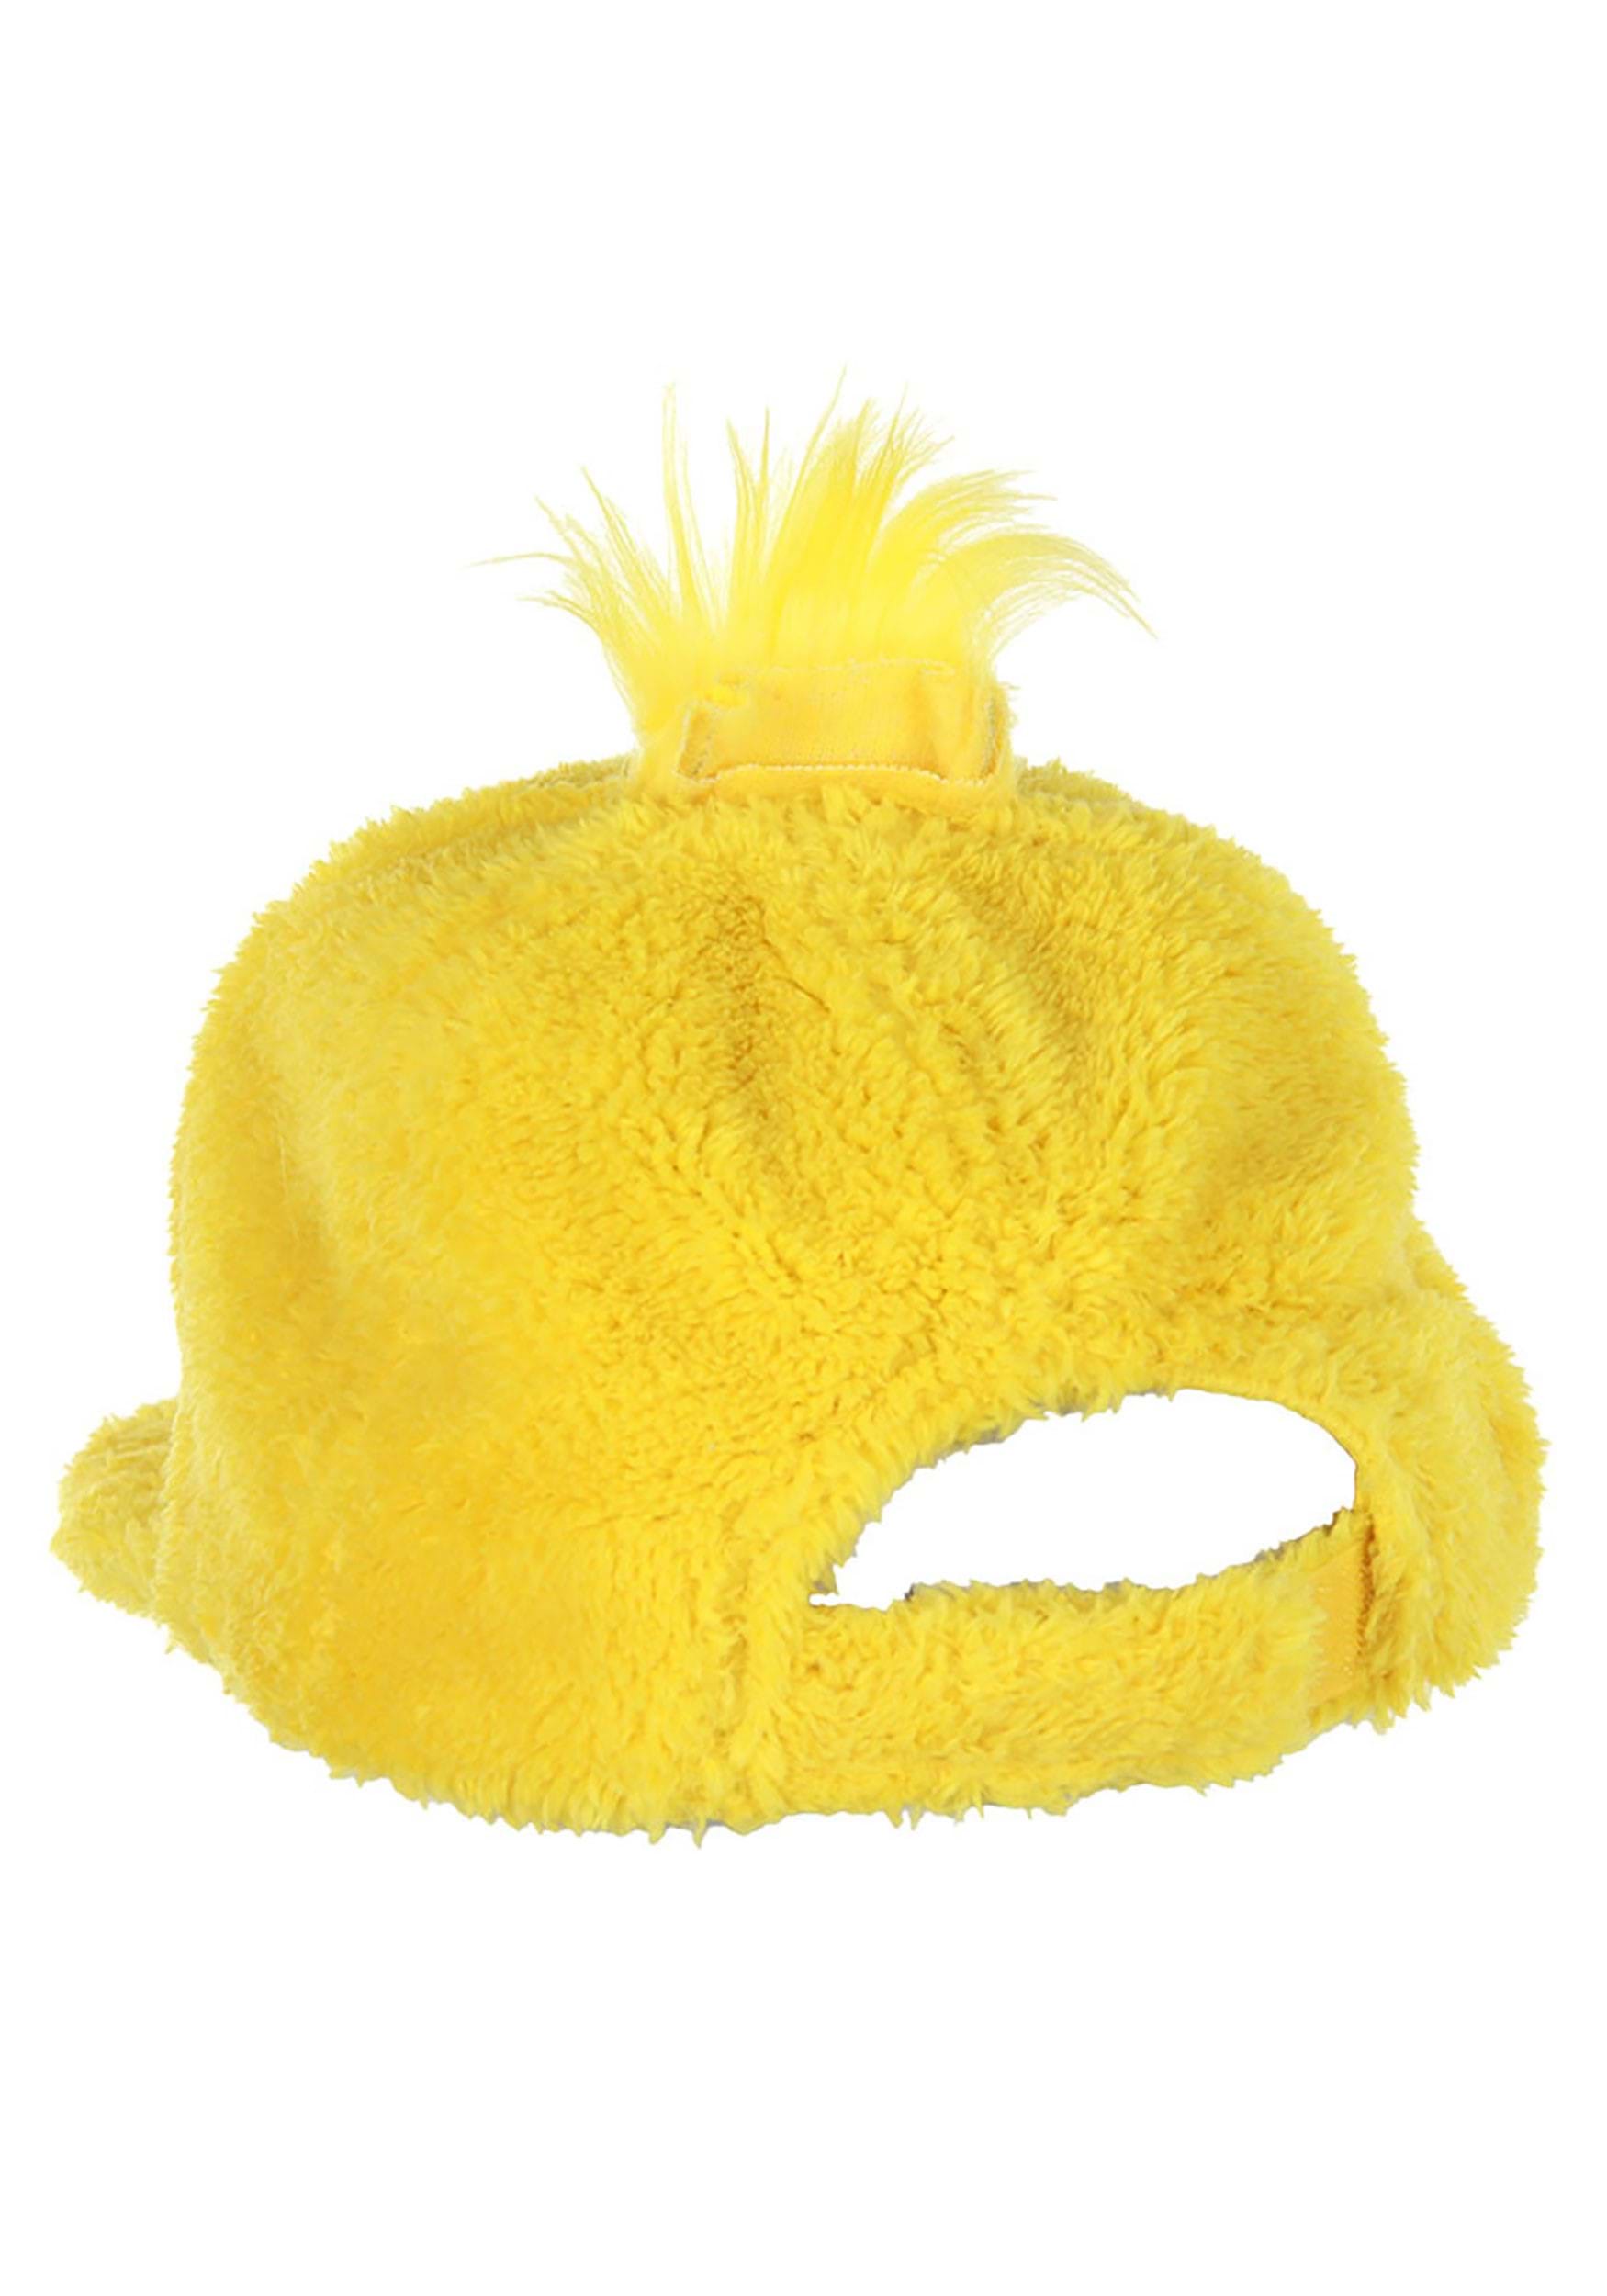 Ducky Fuzzy Cap